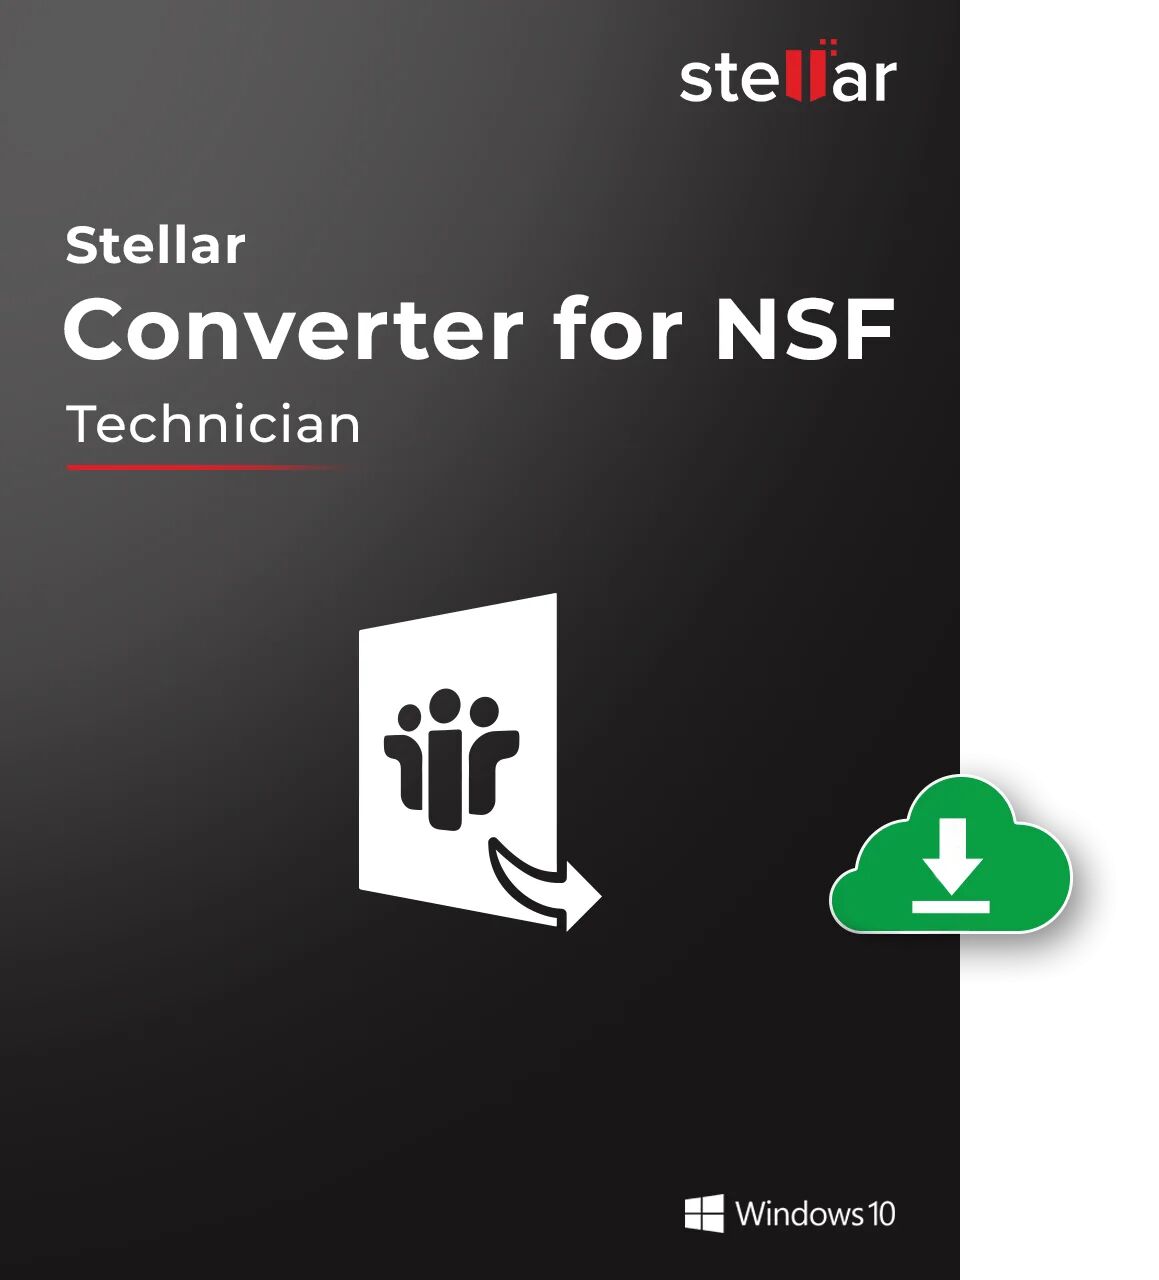 Stellar Converter for NSF Corporate